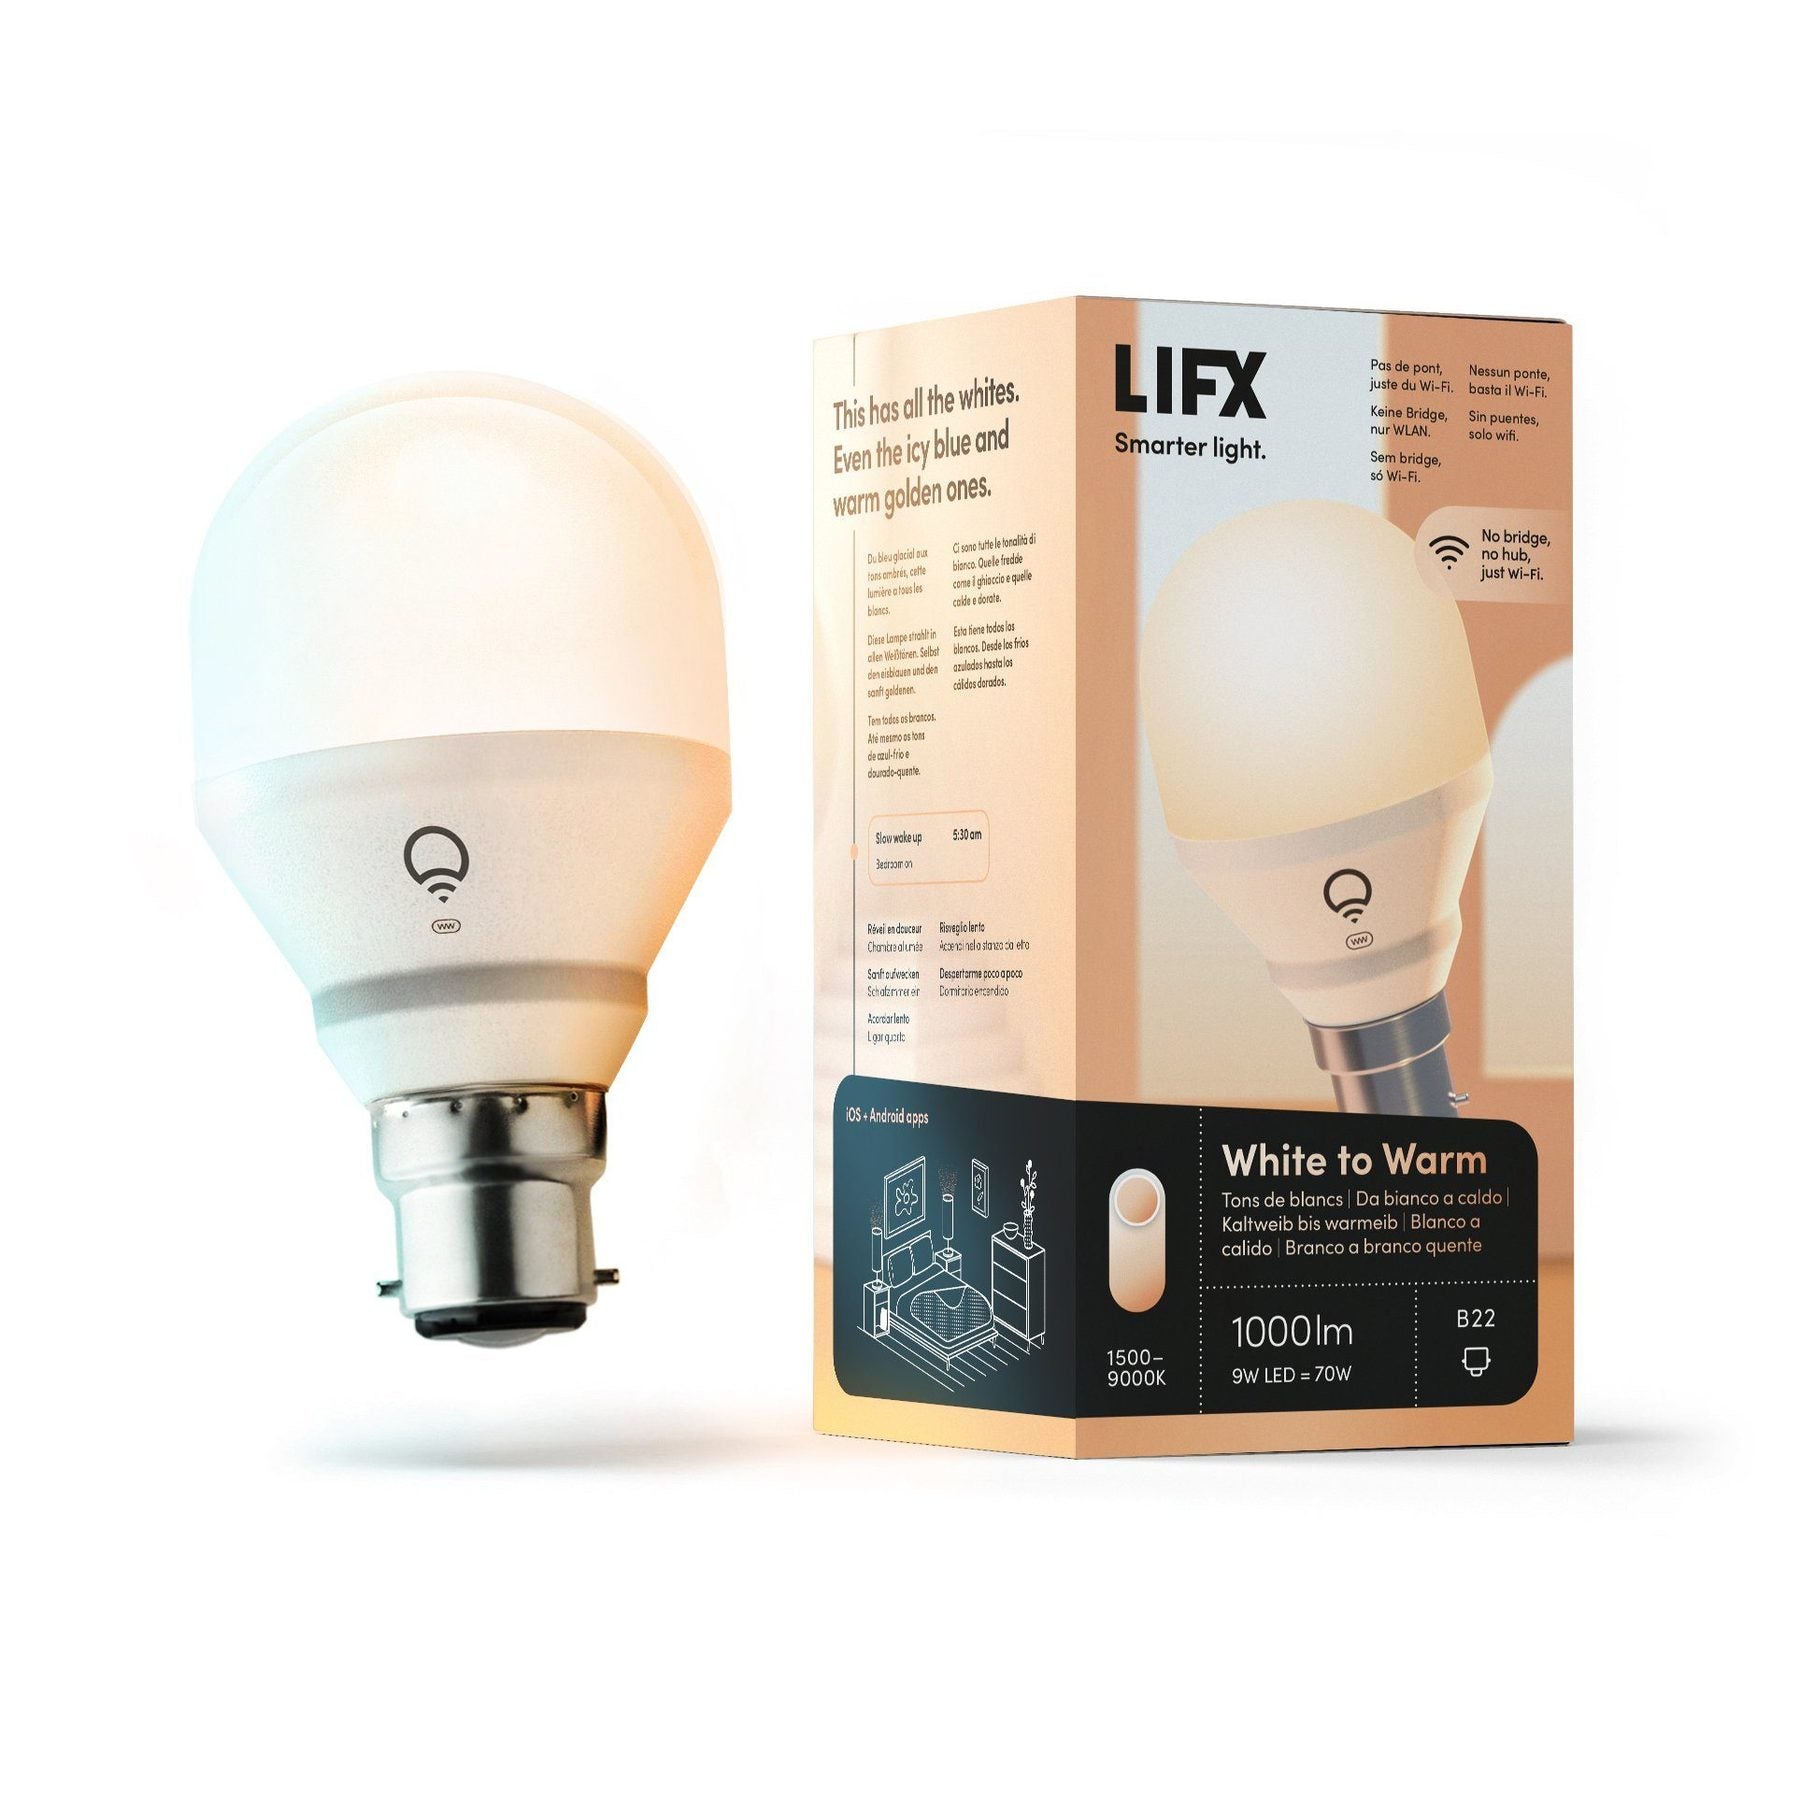 LIFX Mini light bulb next to its packaging